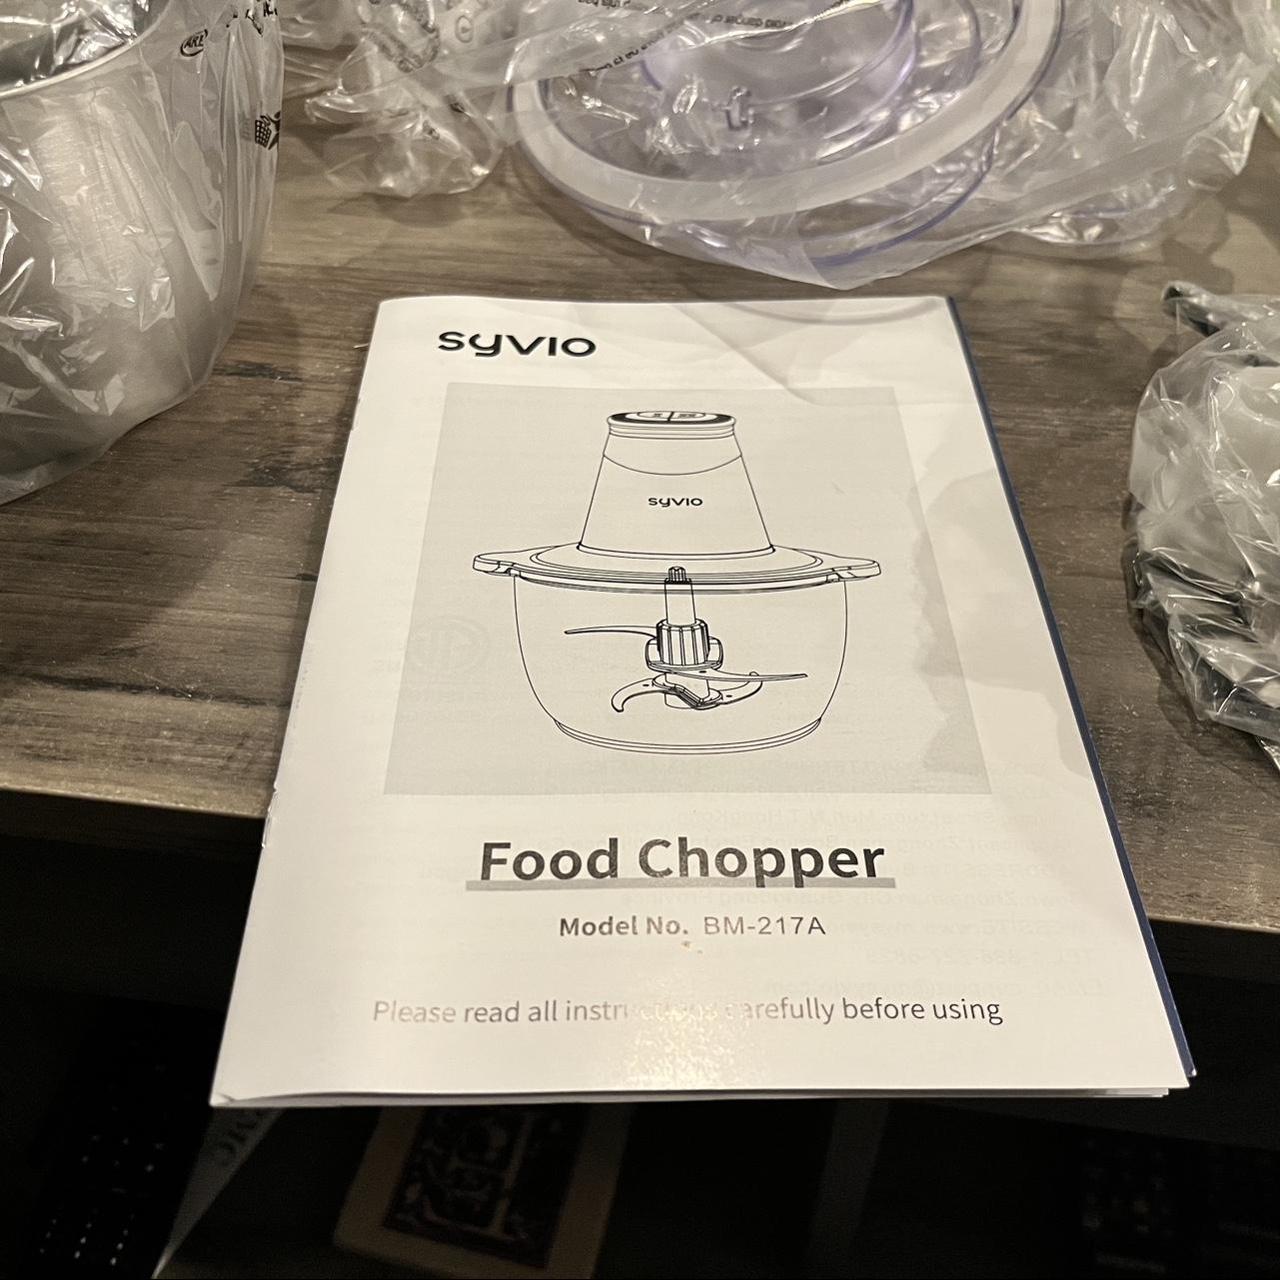 Syvio Food Chopper Model BM-217A 120V Size 5 Cup - Depop